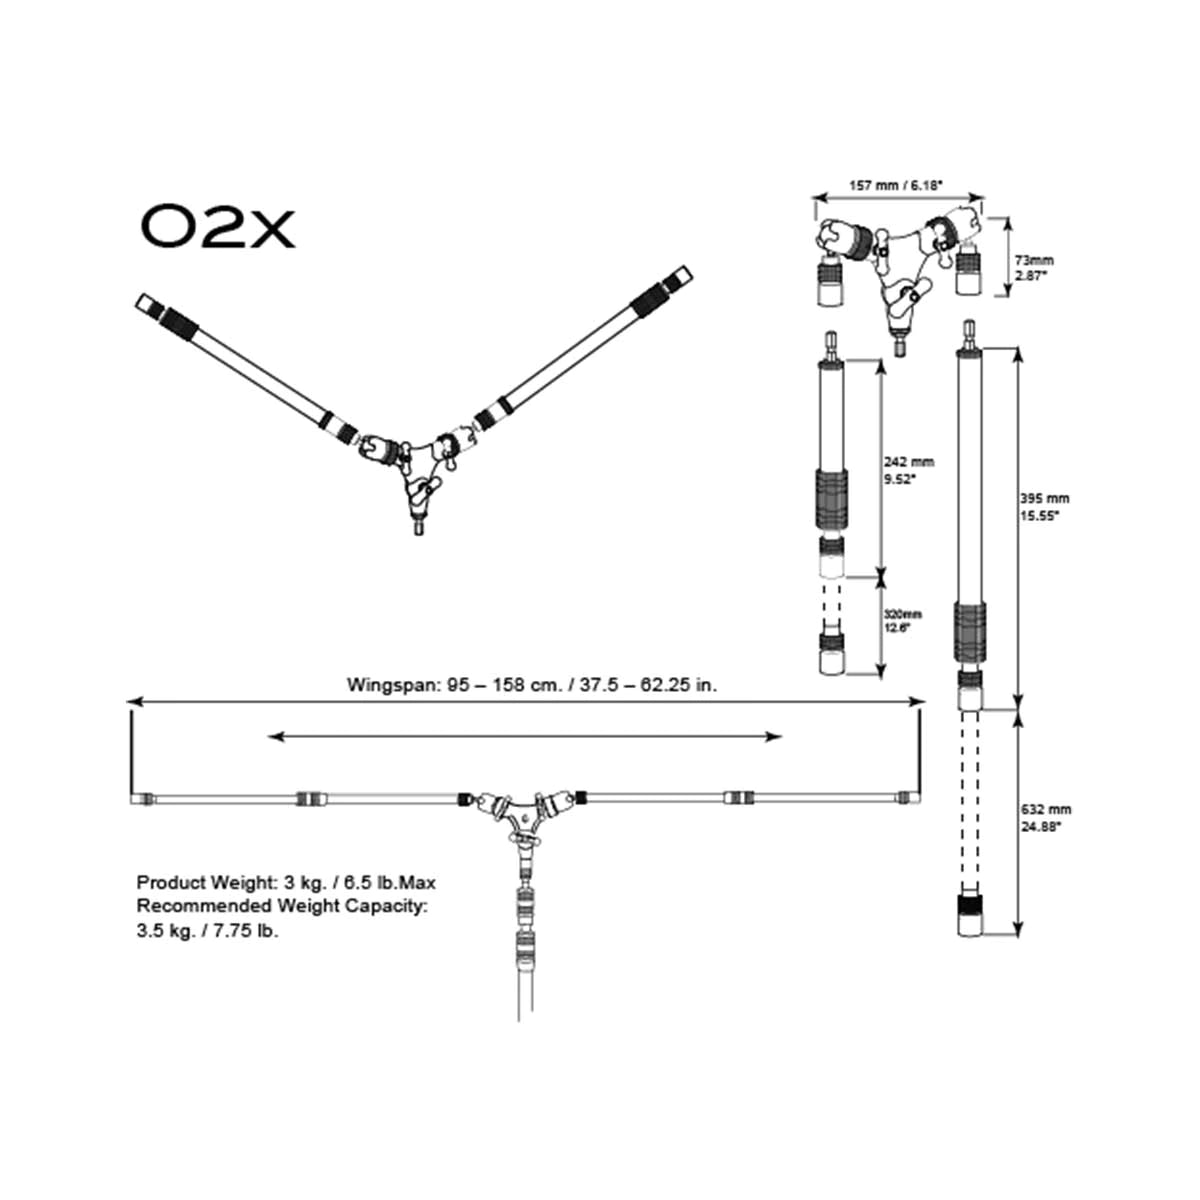 Triad-Orbit O2X Dual Arm Orbital Boom with Interchangeable Arms